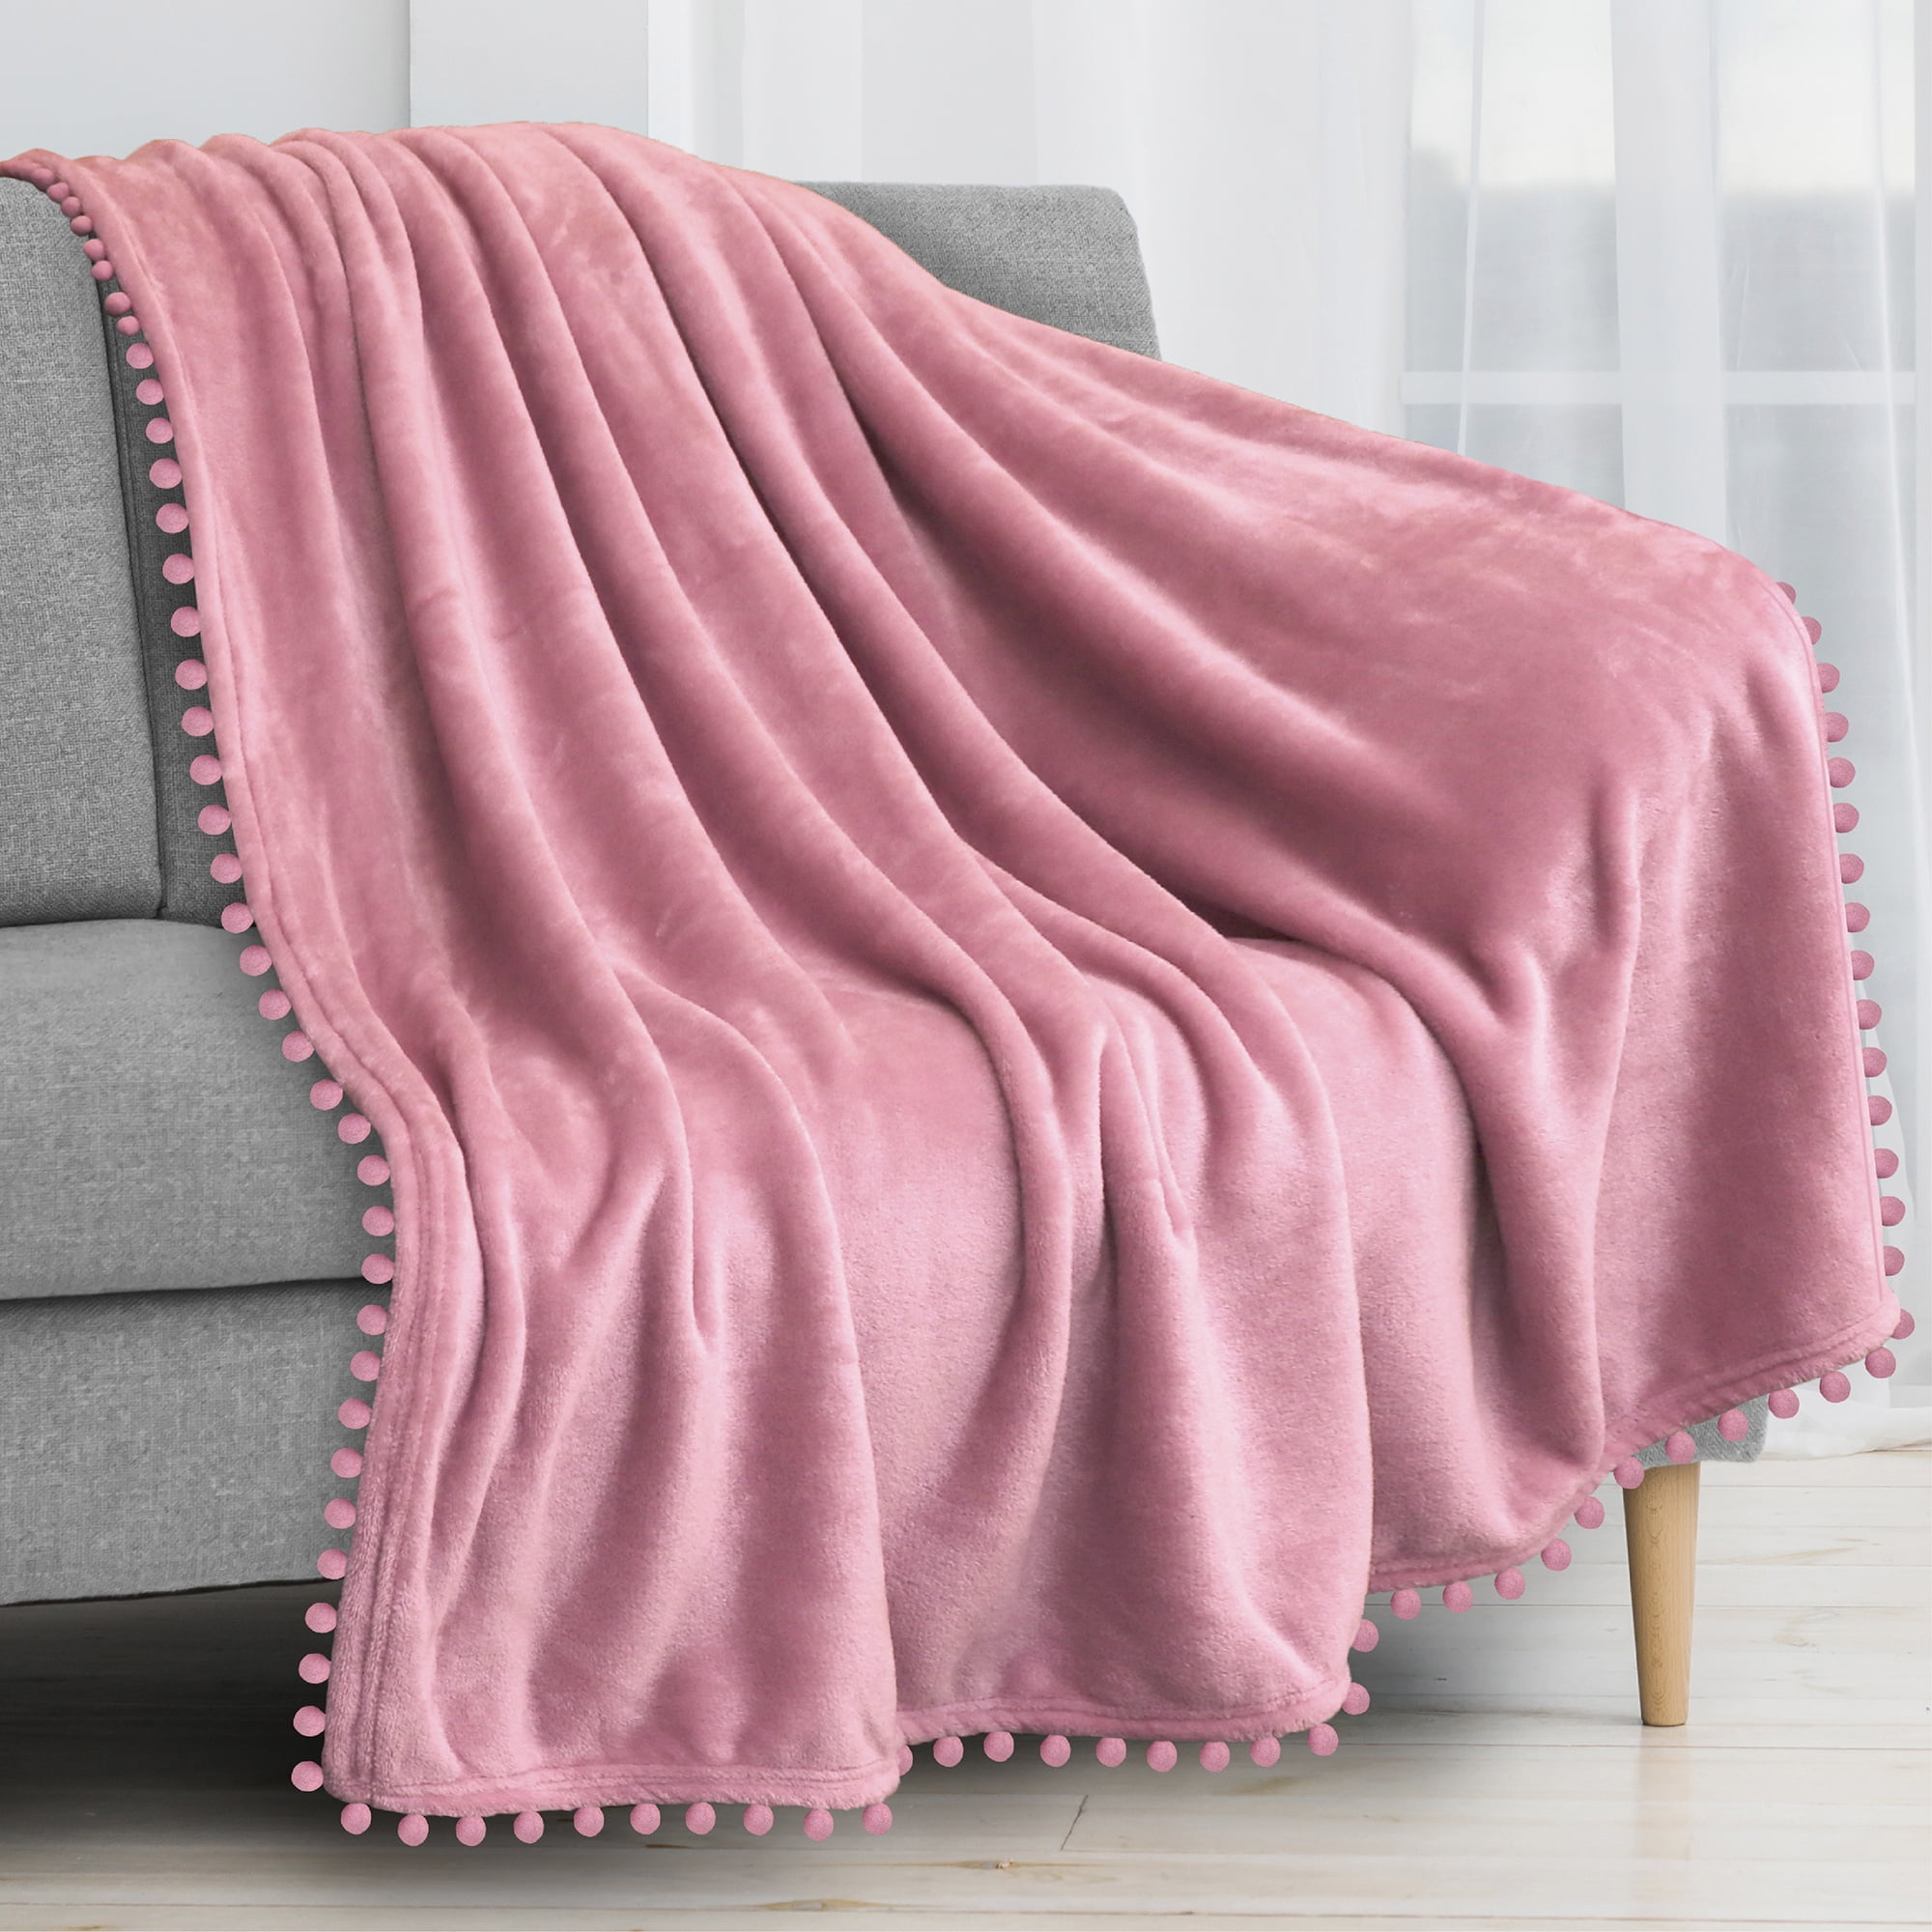 Pavilia Pom Pom Blanket Throw Blush Light Pink Soft Fleece Pompom Fringe Blanket For Couch